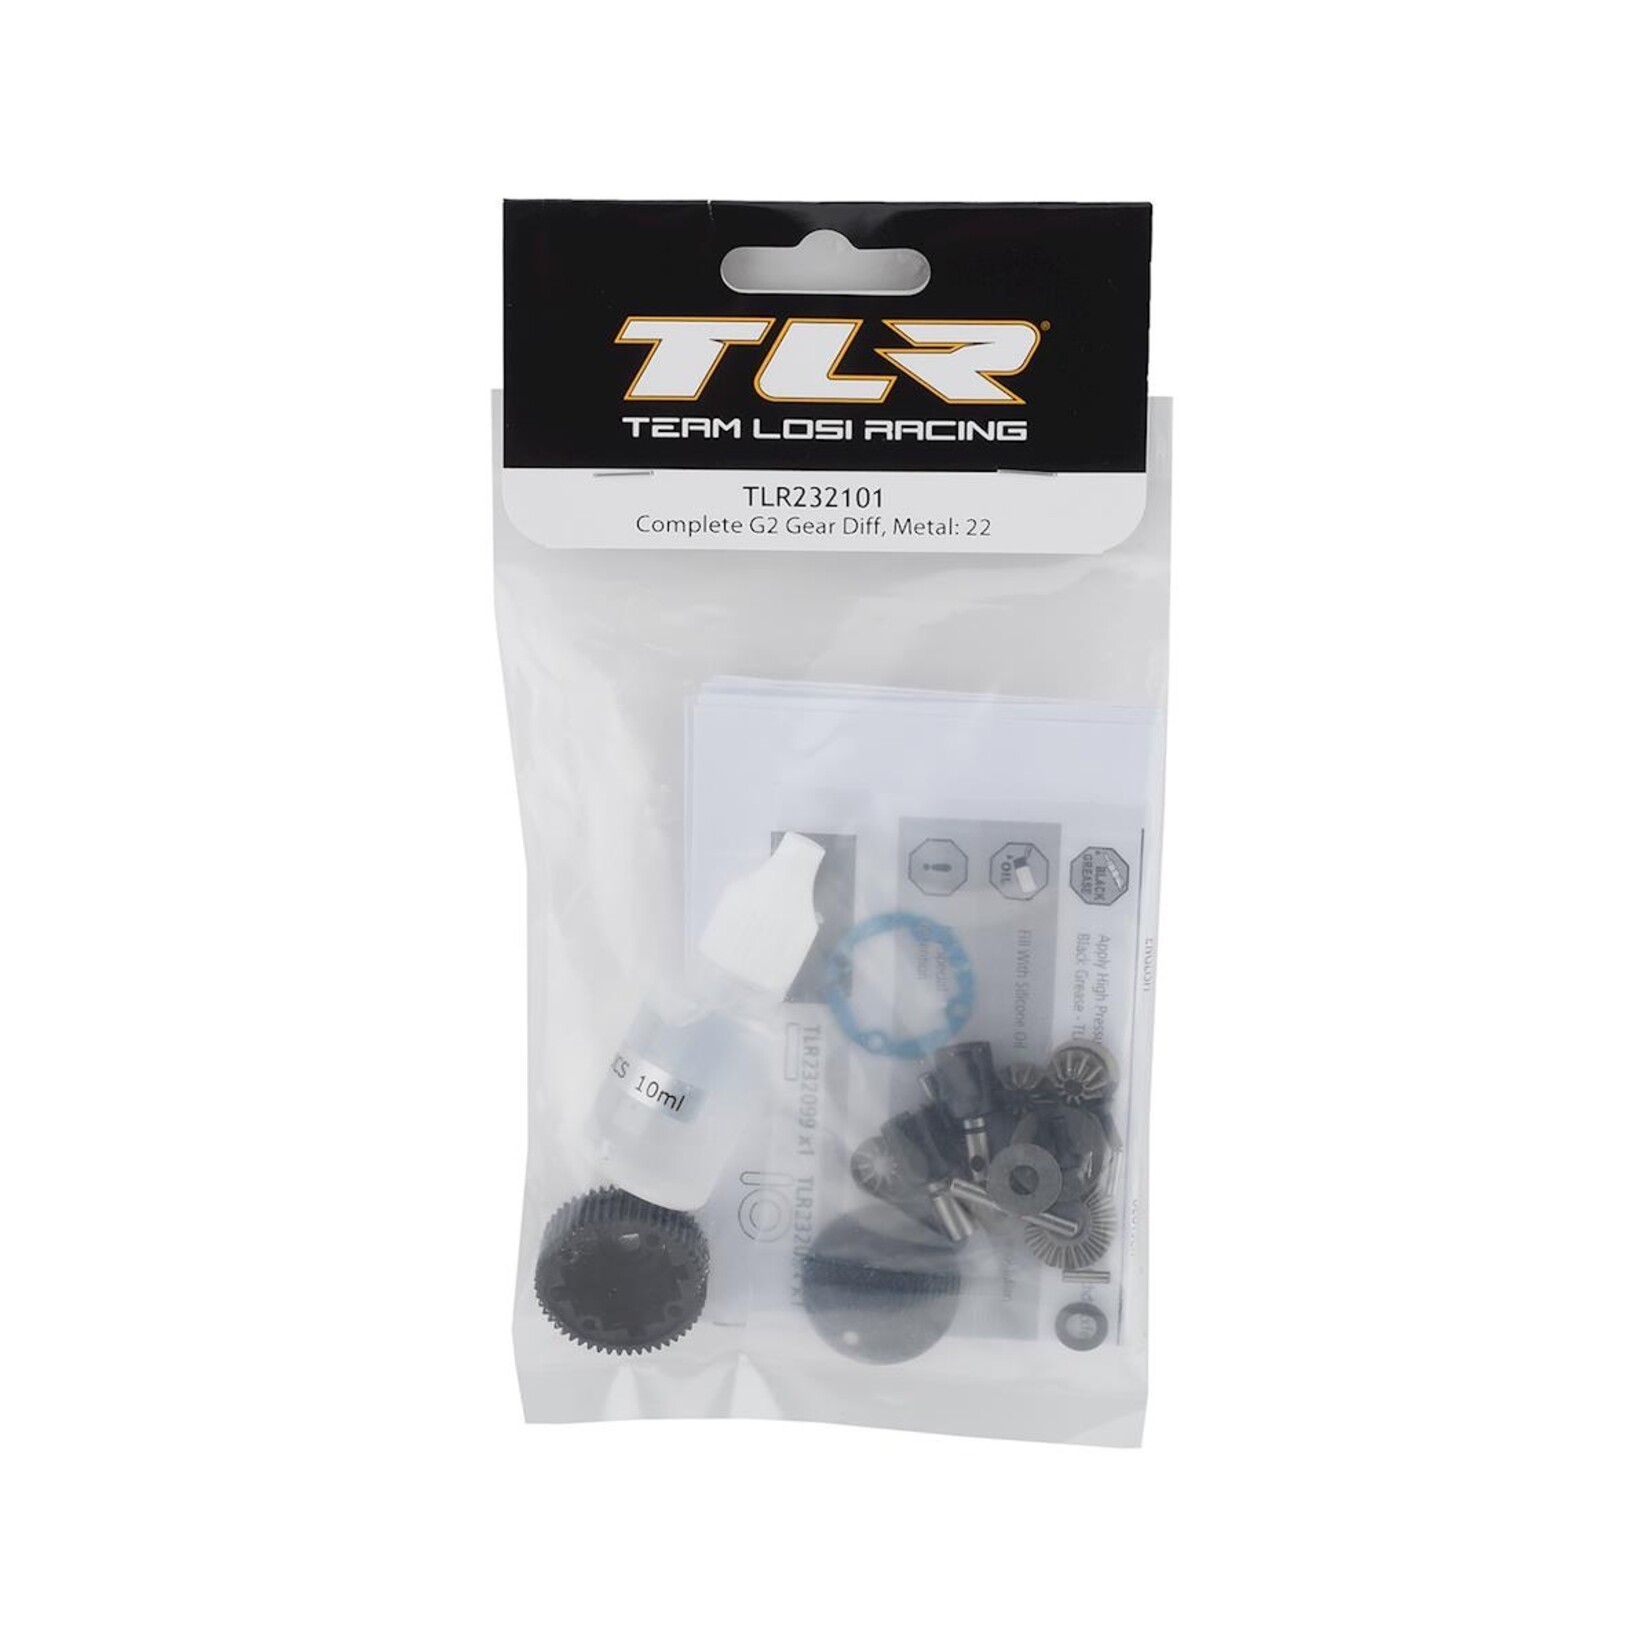 TLR Team Losi Racing 22 Complete Metal G2 Gear Diff #TLR232101